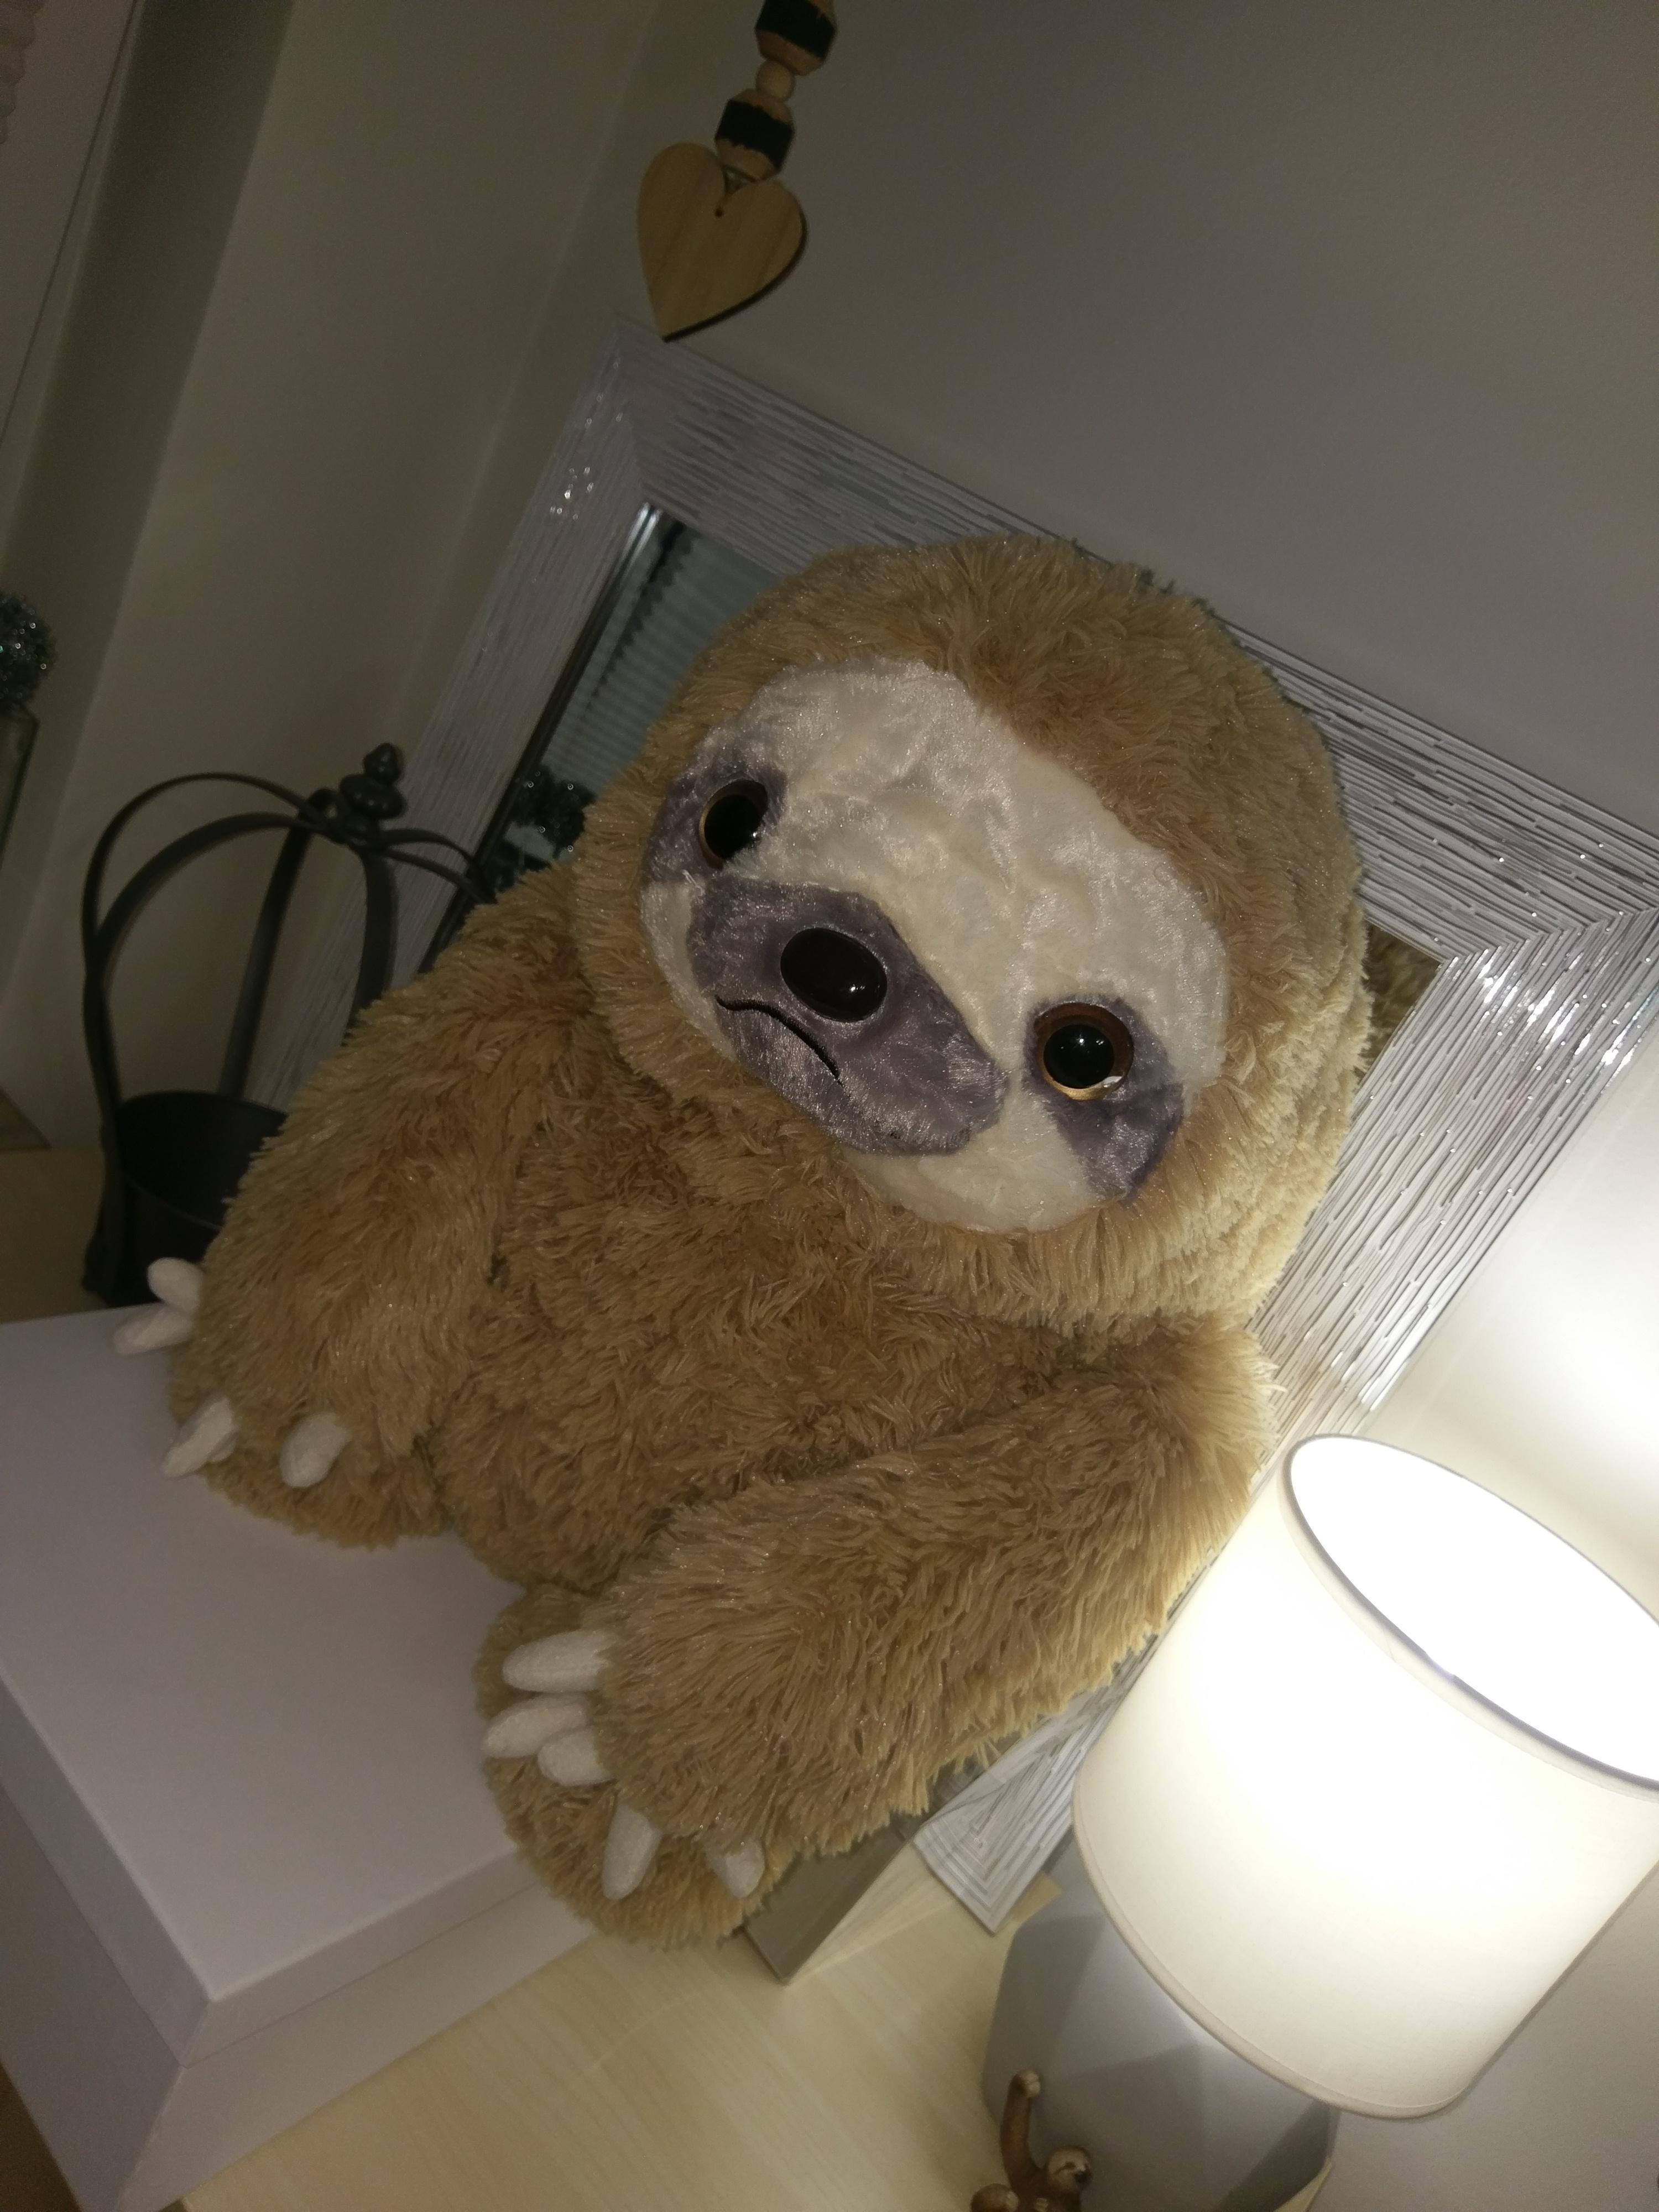 Sloth is waiting for you...
#livingchallenge#kinderzimmer